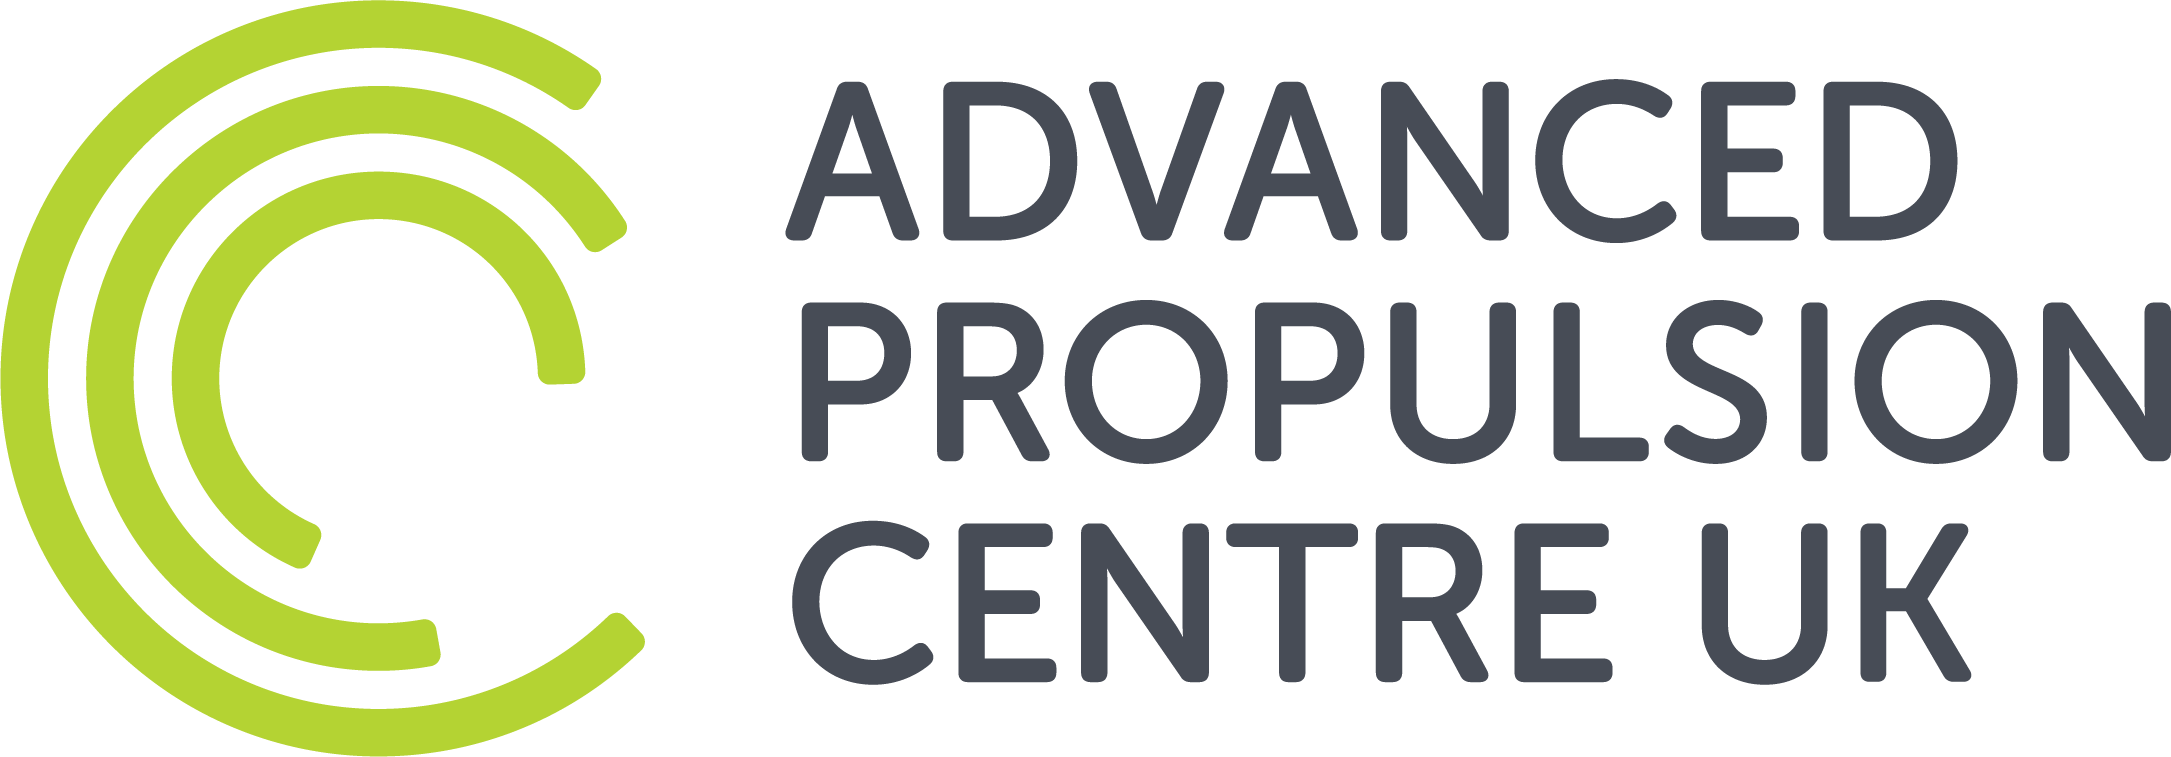 Linked logo for Advanced Propulsion Centre